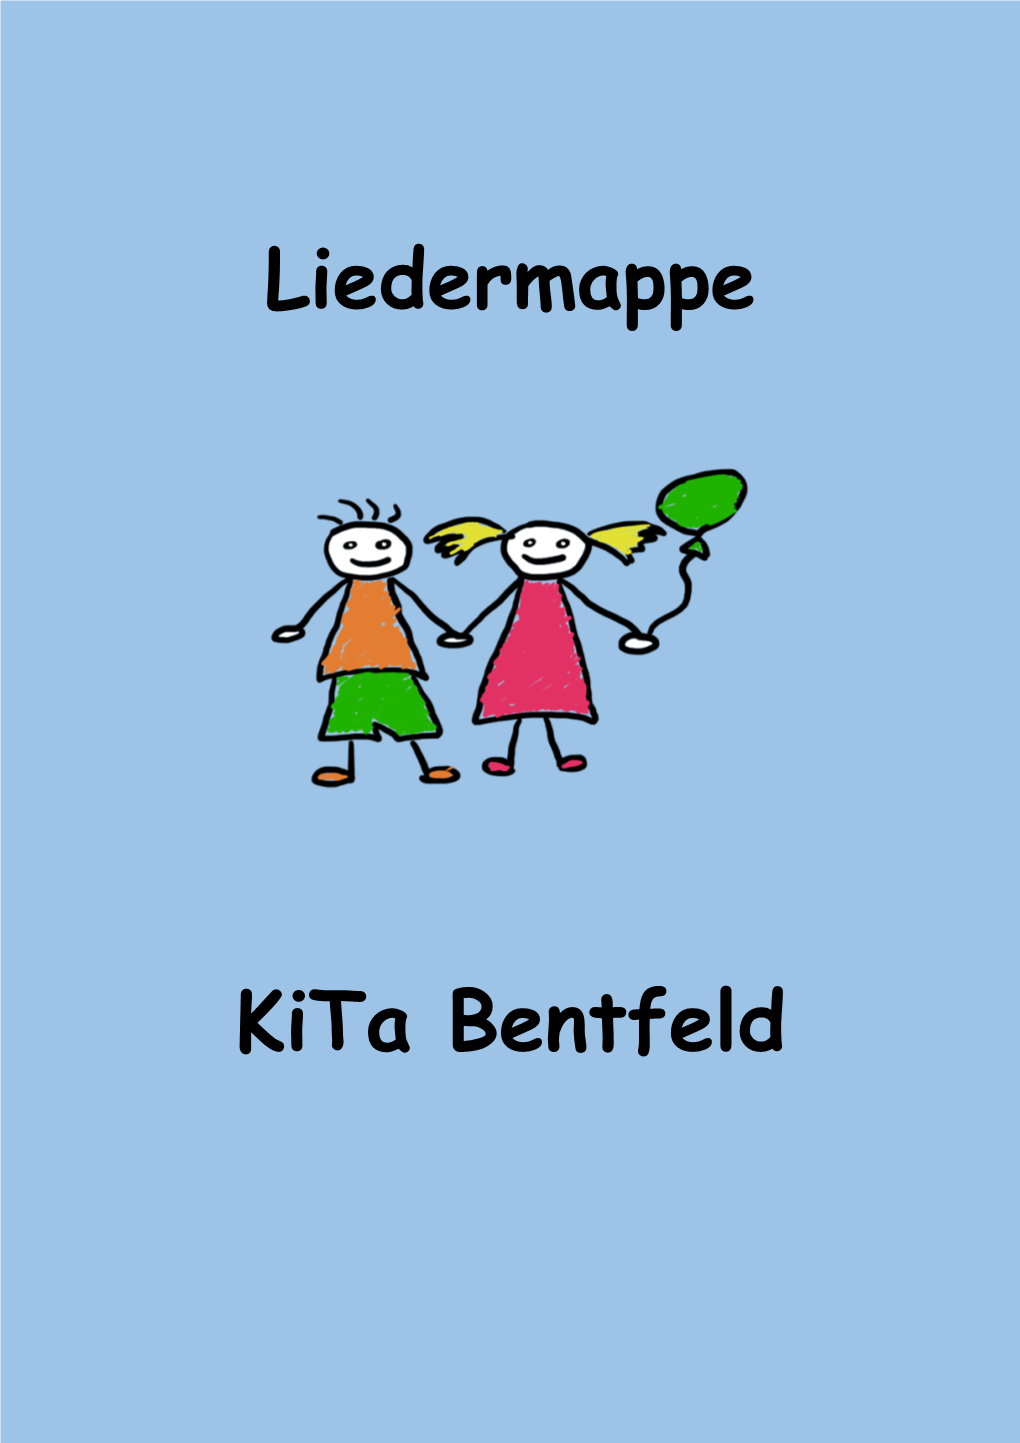 Liedermappe Kita Bentfeld (PDF)